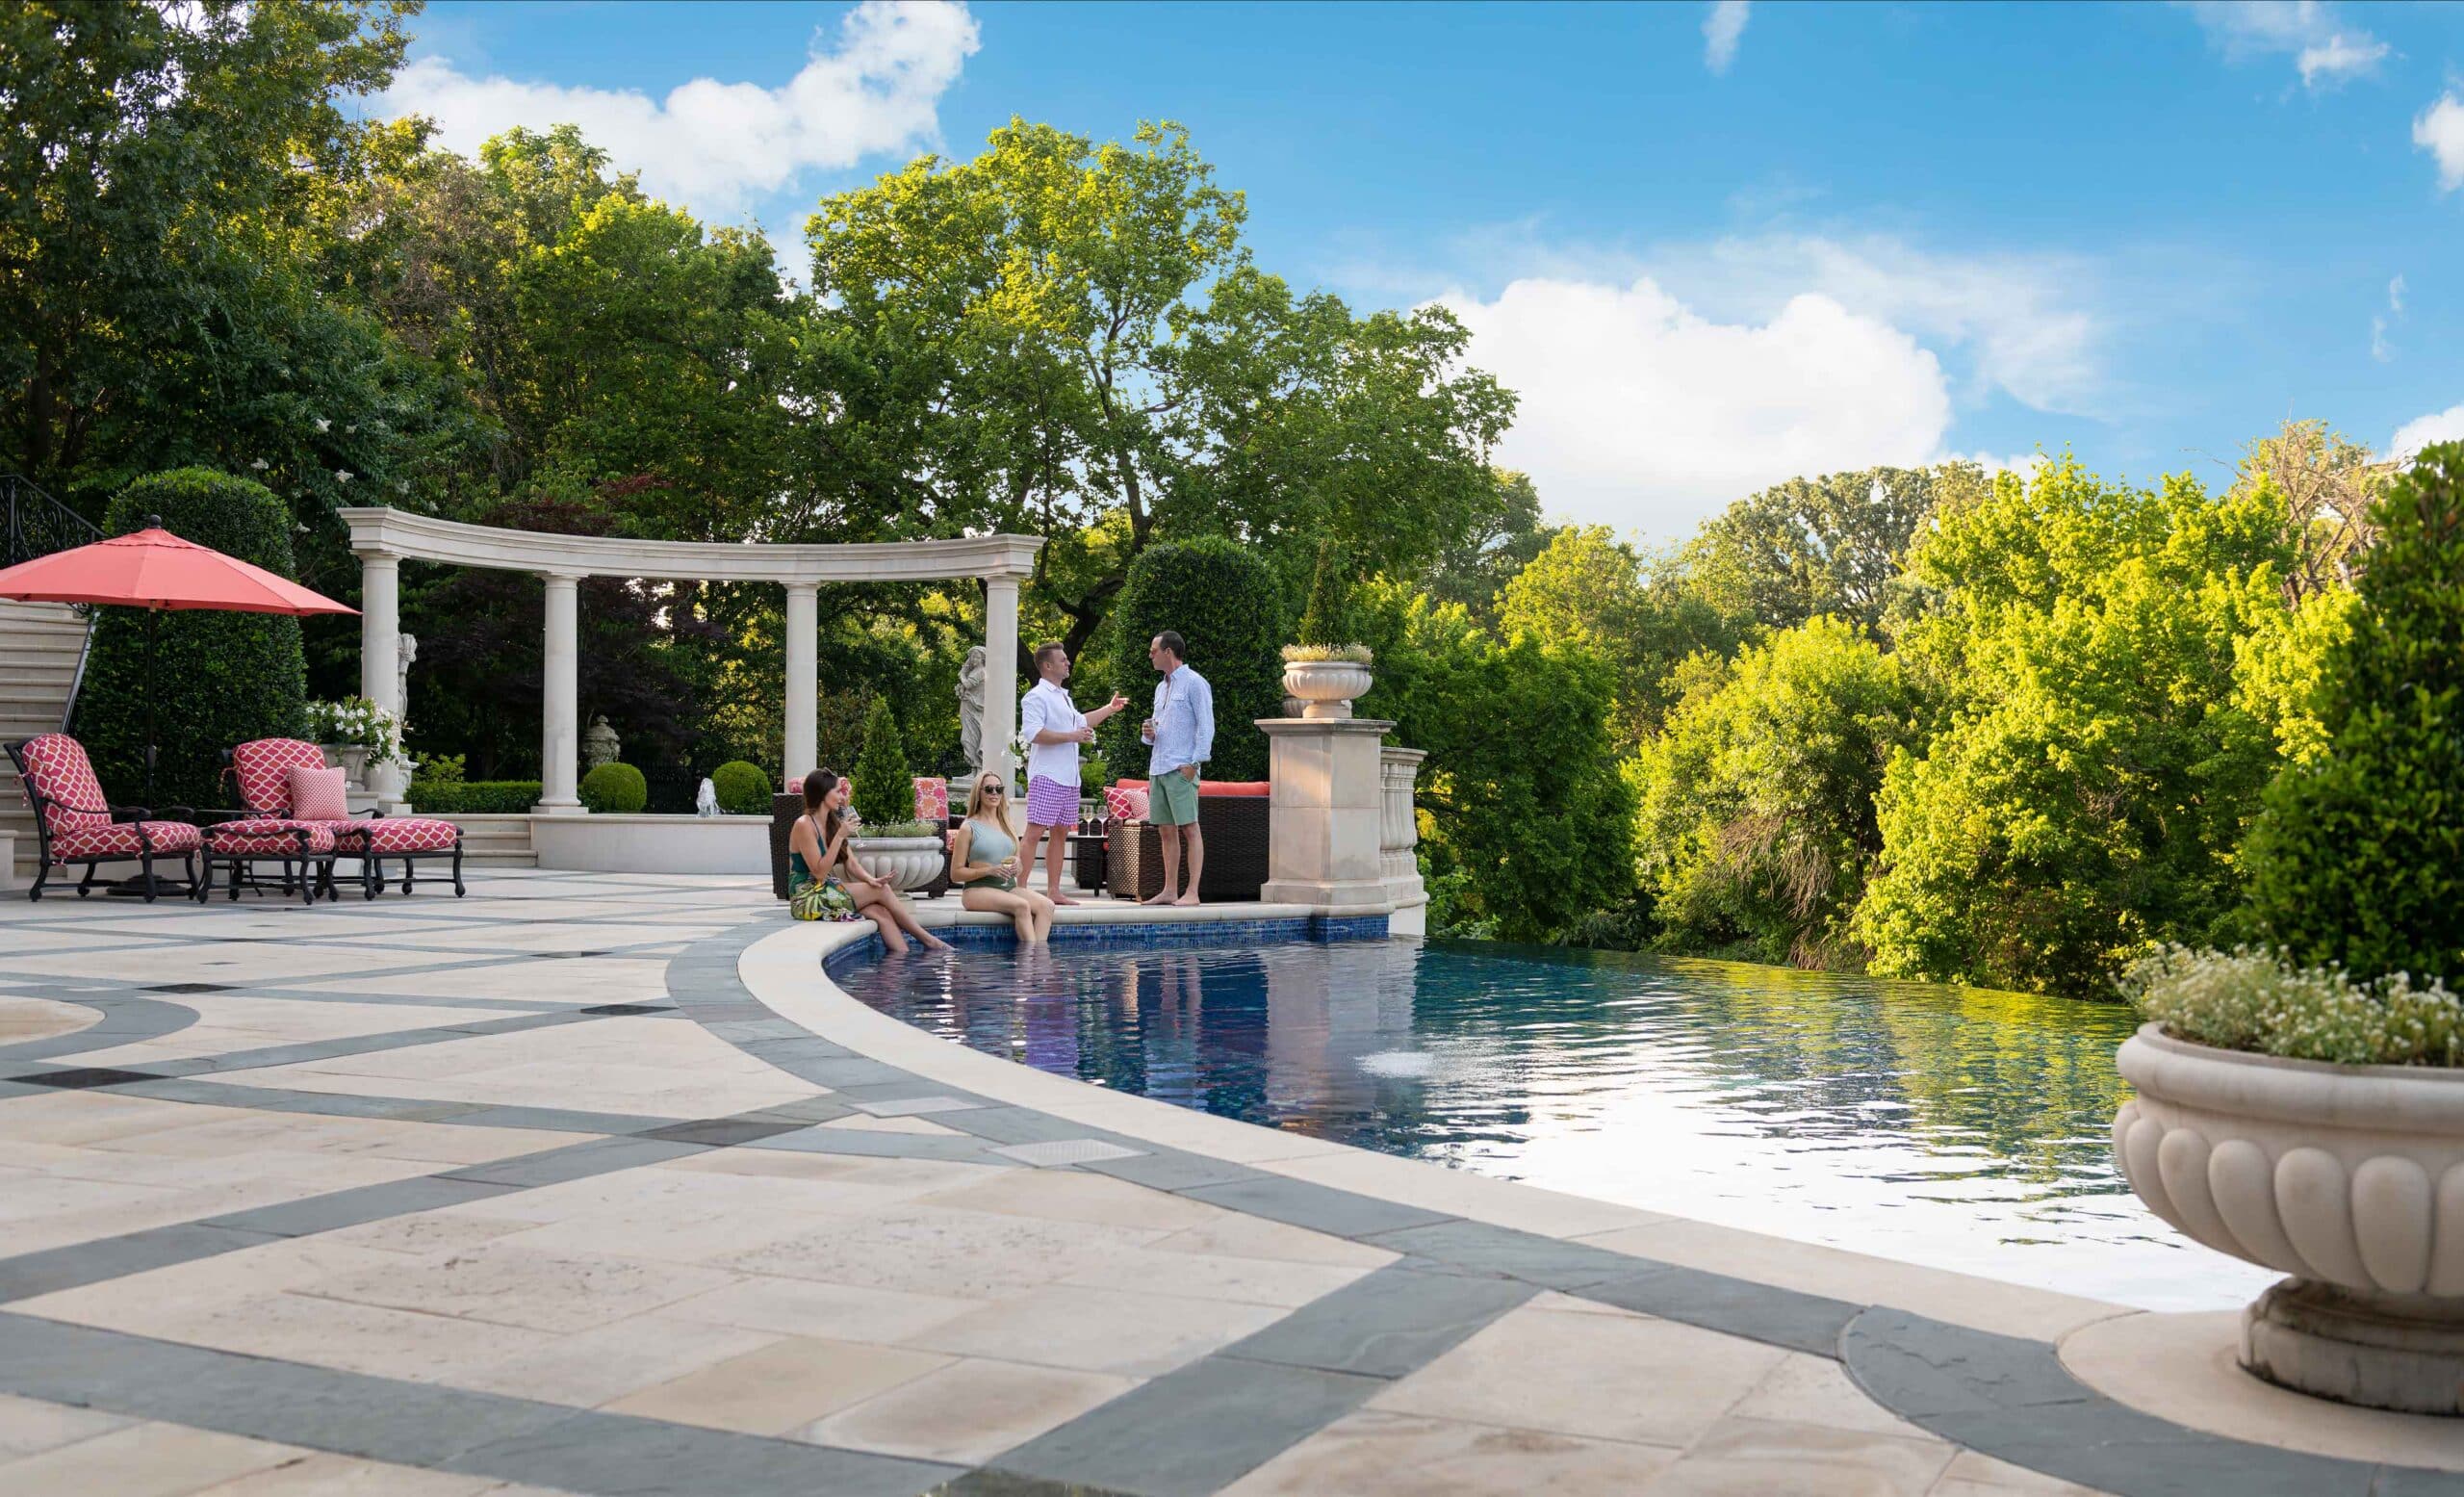 Braewood place pool design - Harold Leidner Landscape Architects